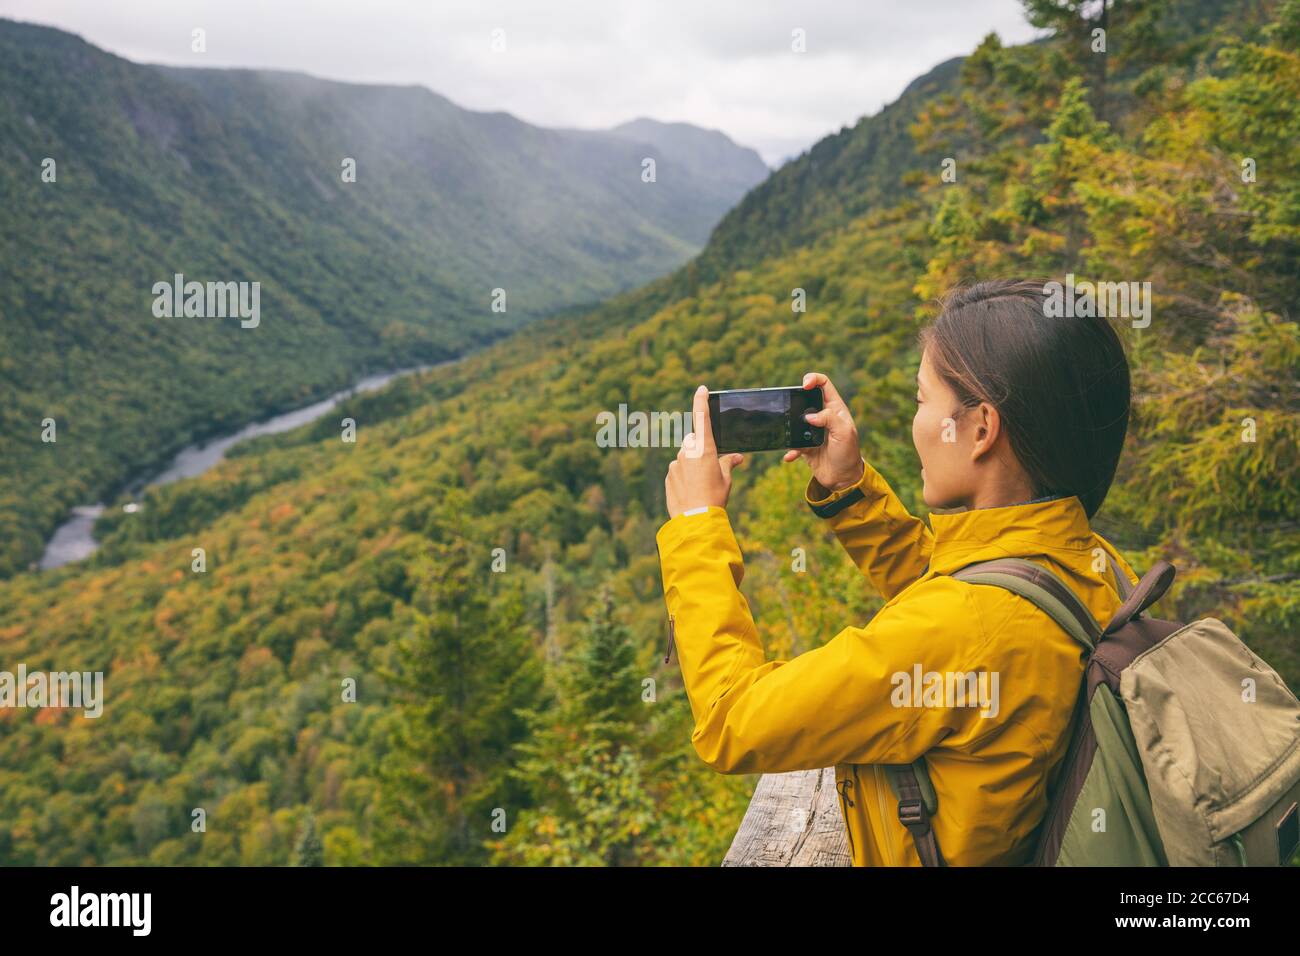 Wanderung Frau Wanderer fotografieren mit Telefon des Flusses Blick von der Spitze des Weges Wandern im Parc National de la Jacques Cartier, Quebec, Kanada Herbst Reise Stockfoto